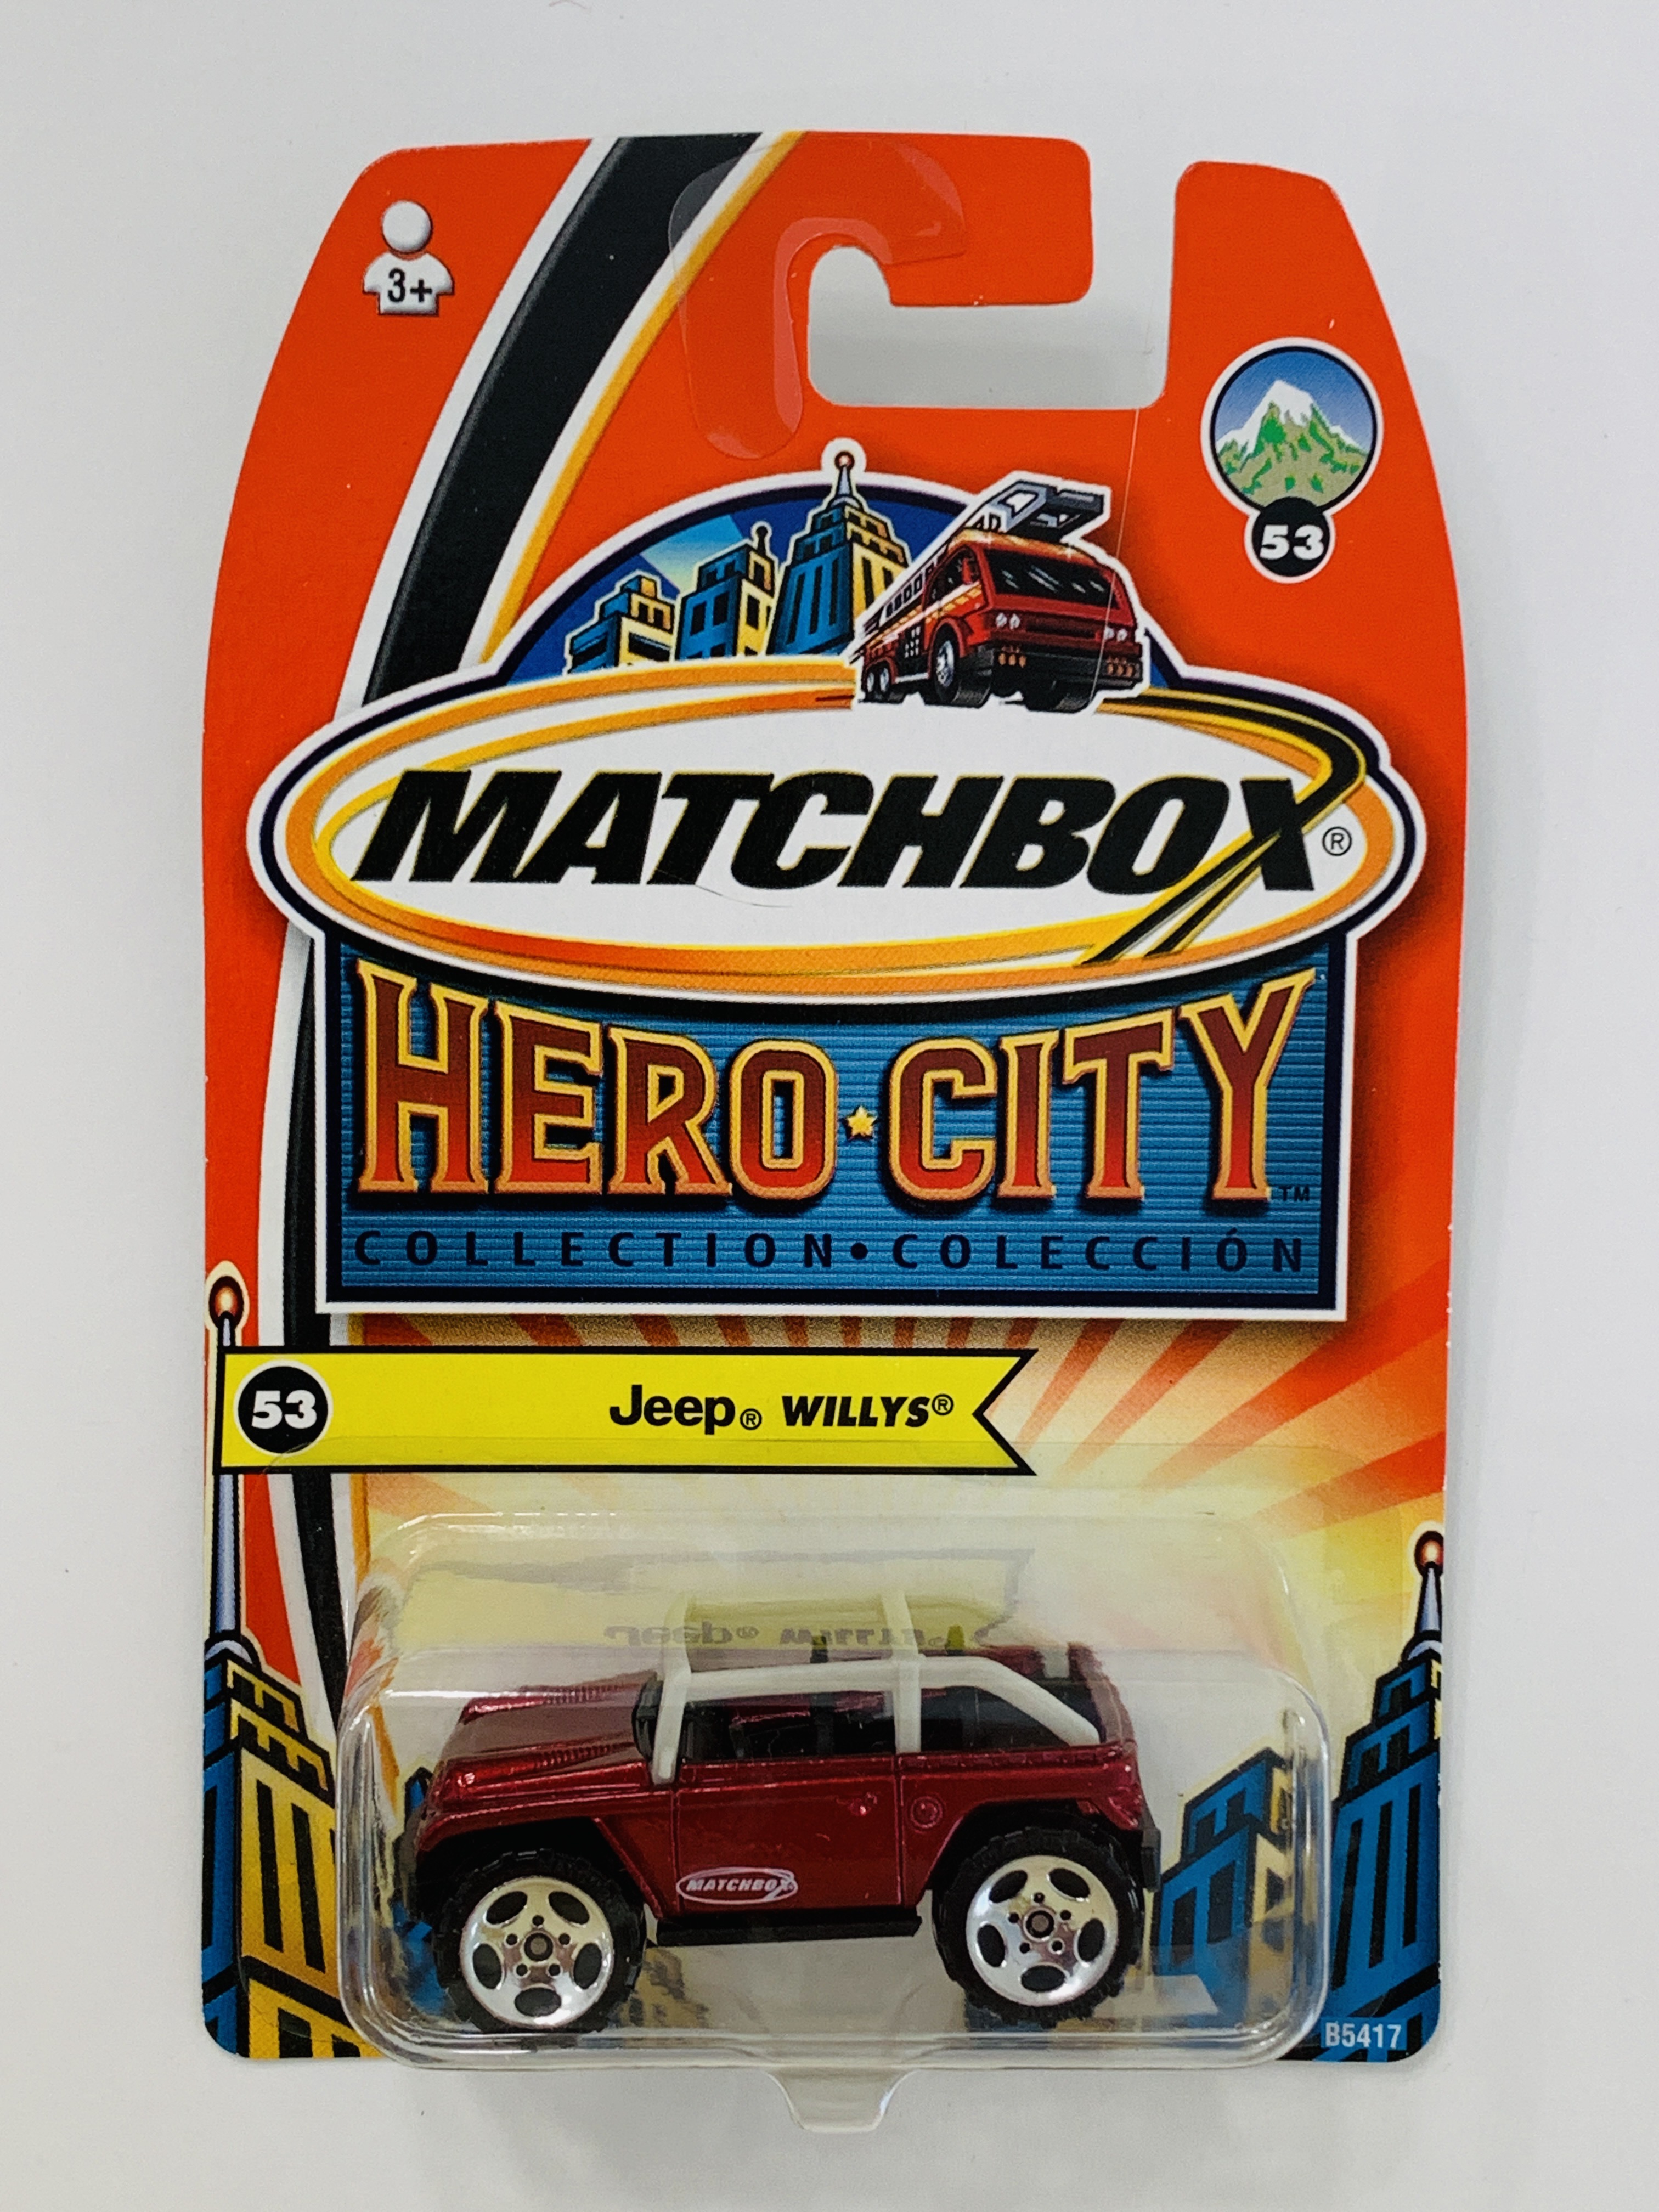 Matchbox Hero City #53 Jeep Willys